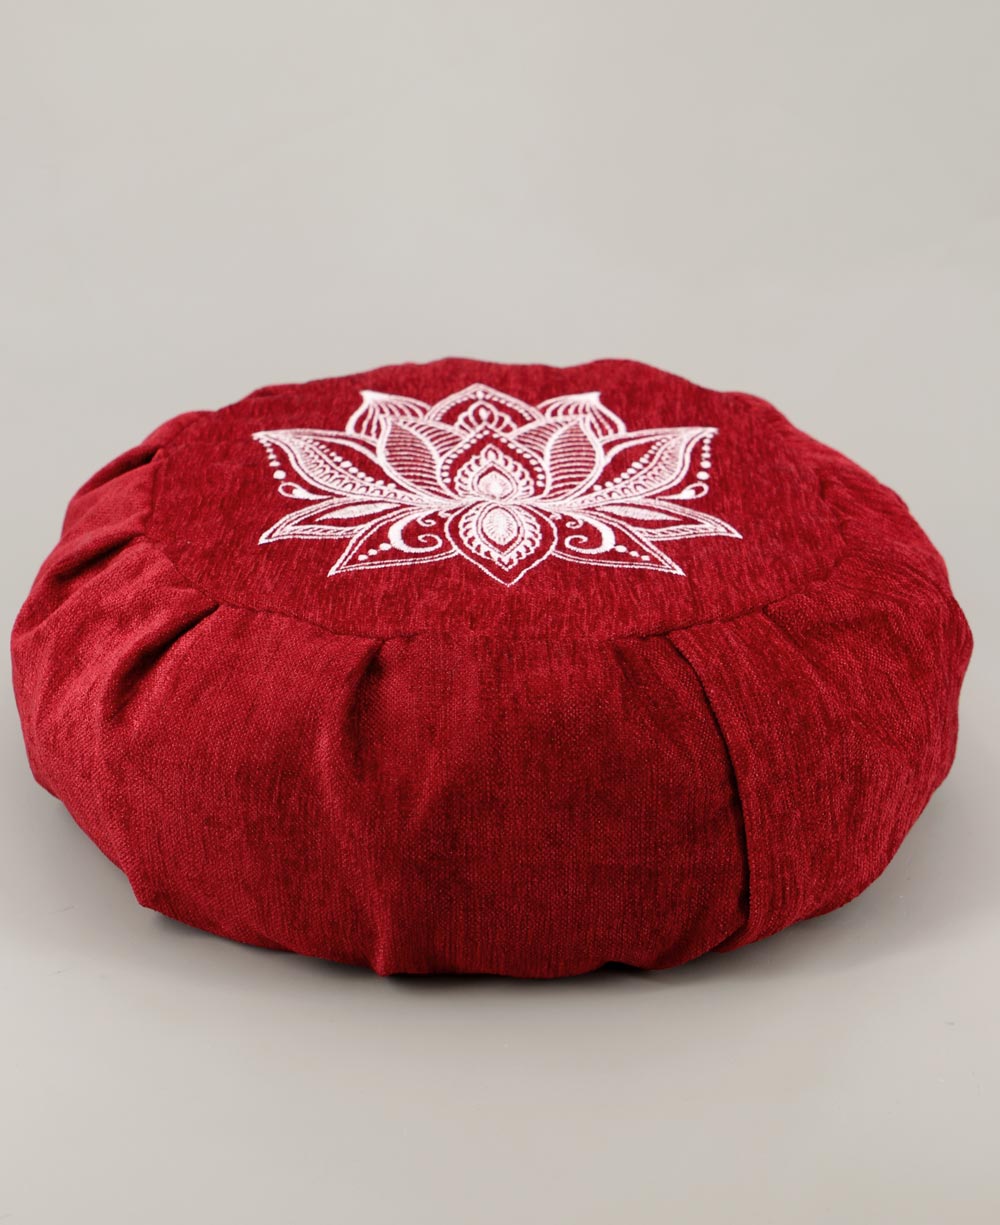 Lotus Design Zafu Meditation Cushion - Massage Cushions